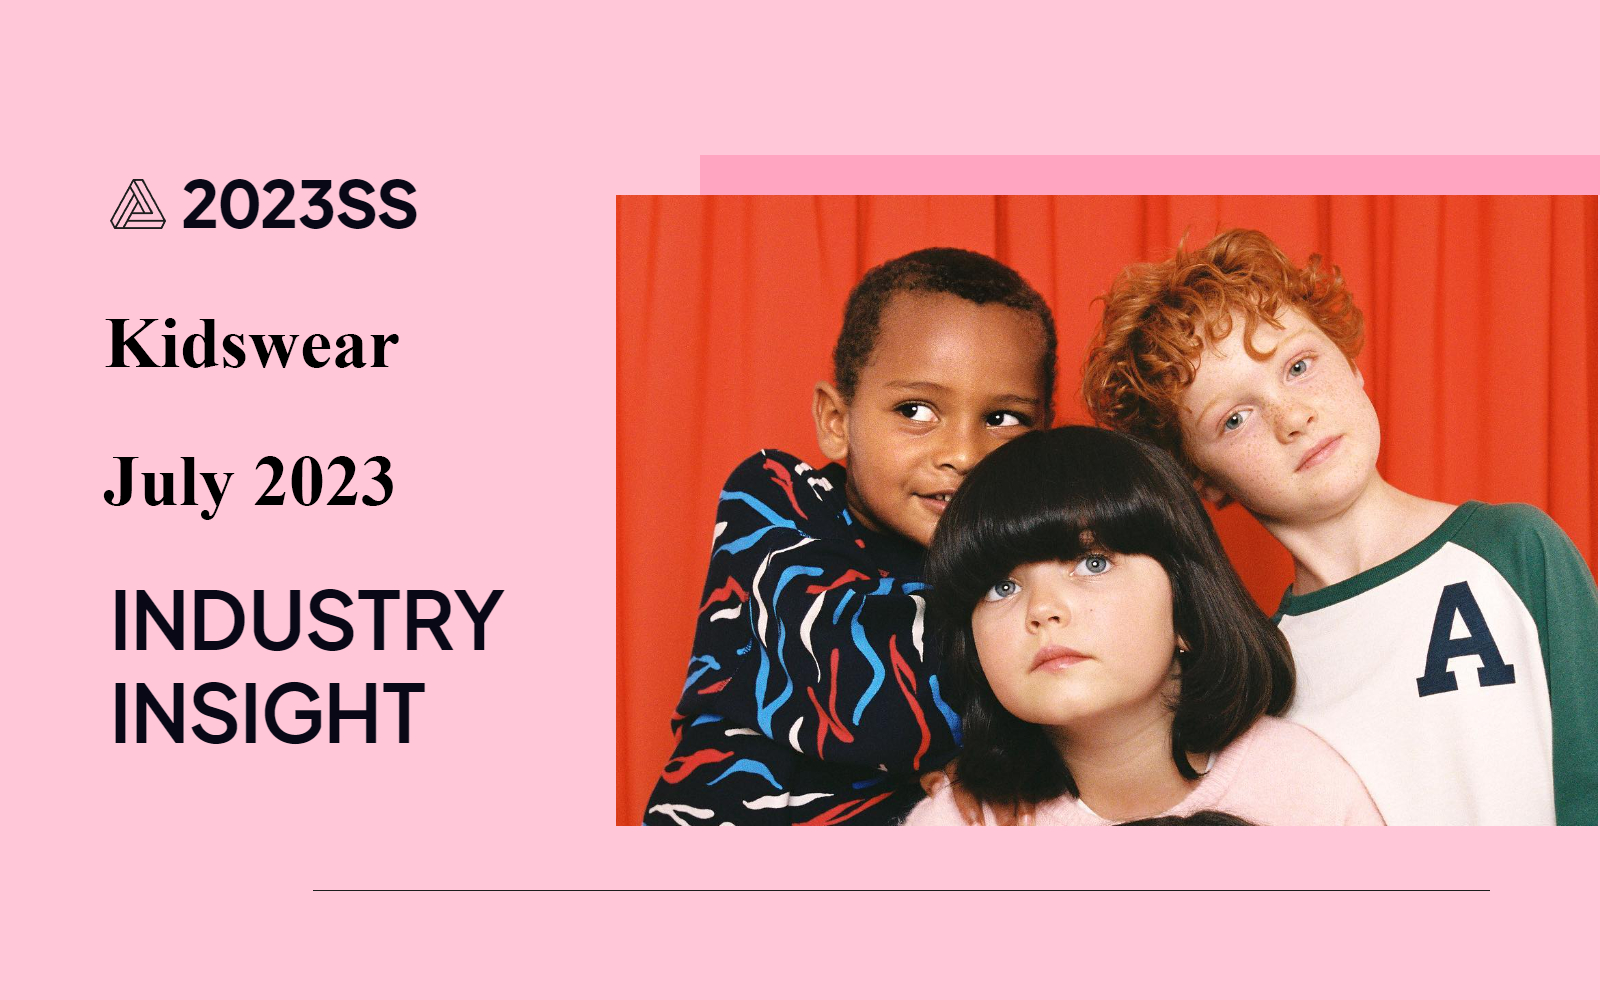 July 2023 -- The Industry Insight of Kidswear